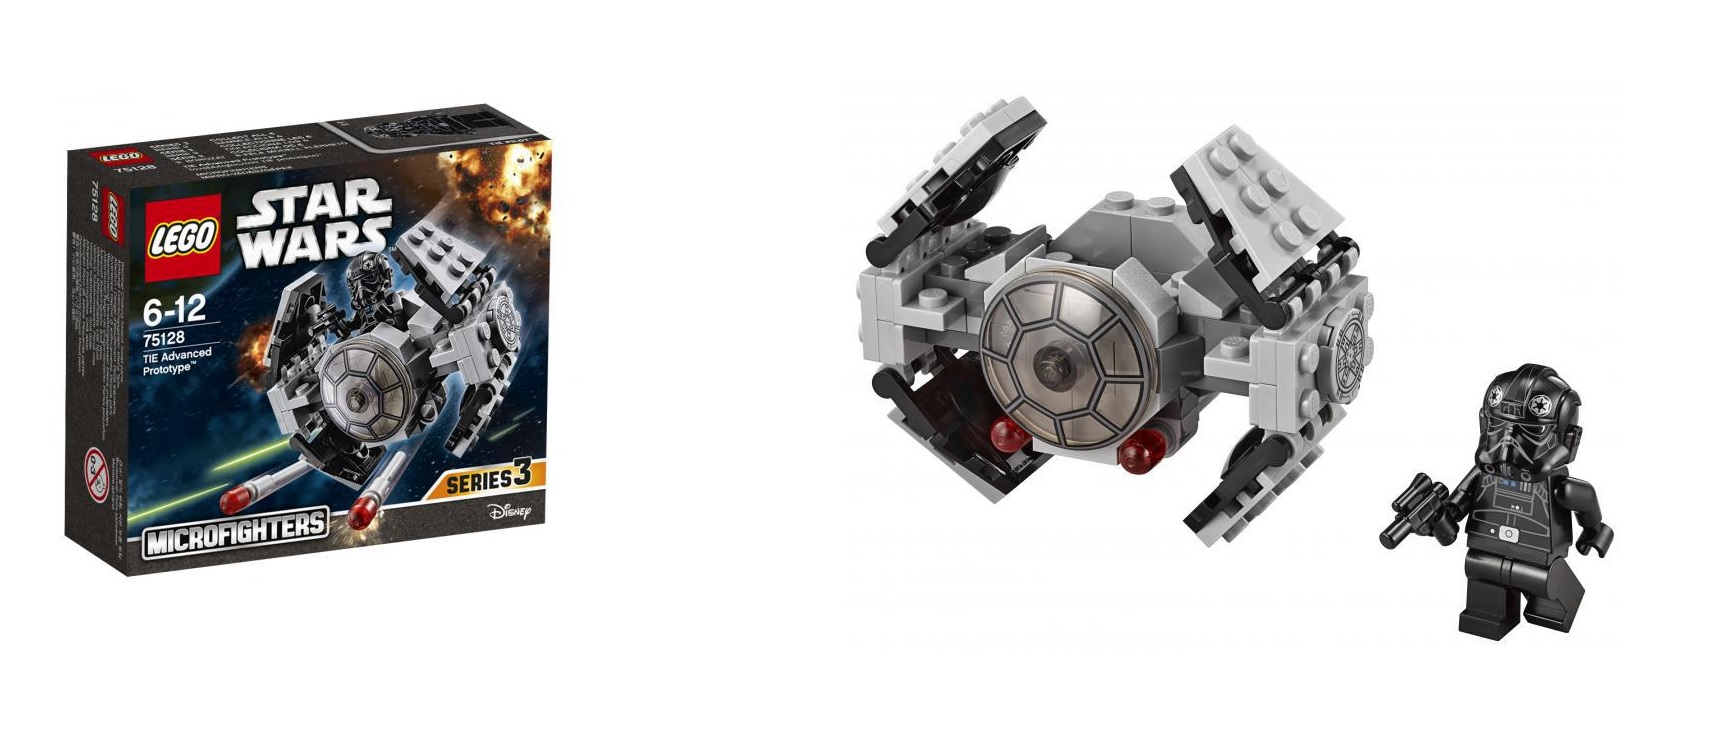 2016 LEGO Star Wars Set Images Revealed (75134 75141 75130 75129 75128 75127) Toys N Bricks